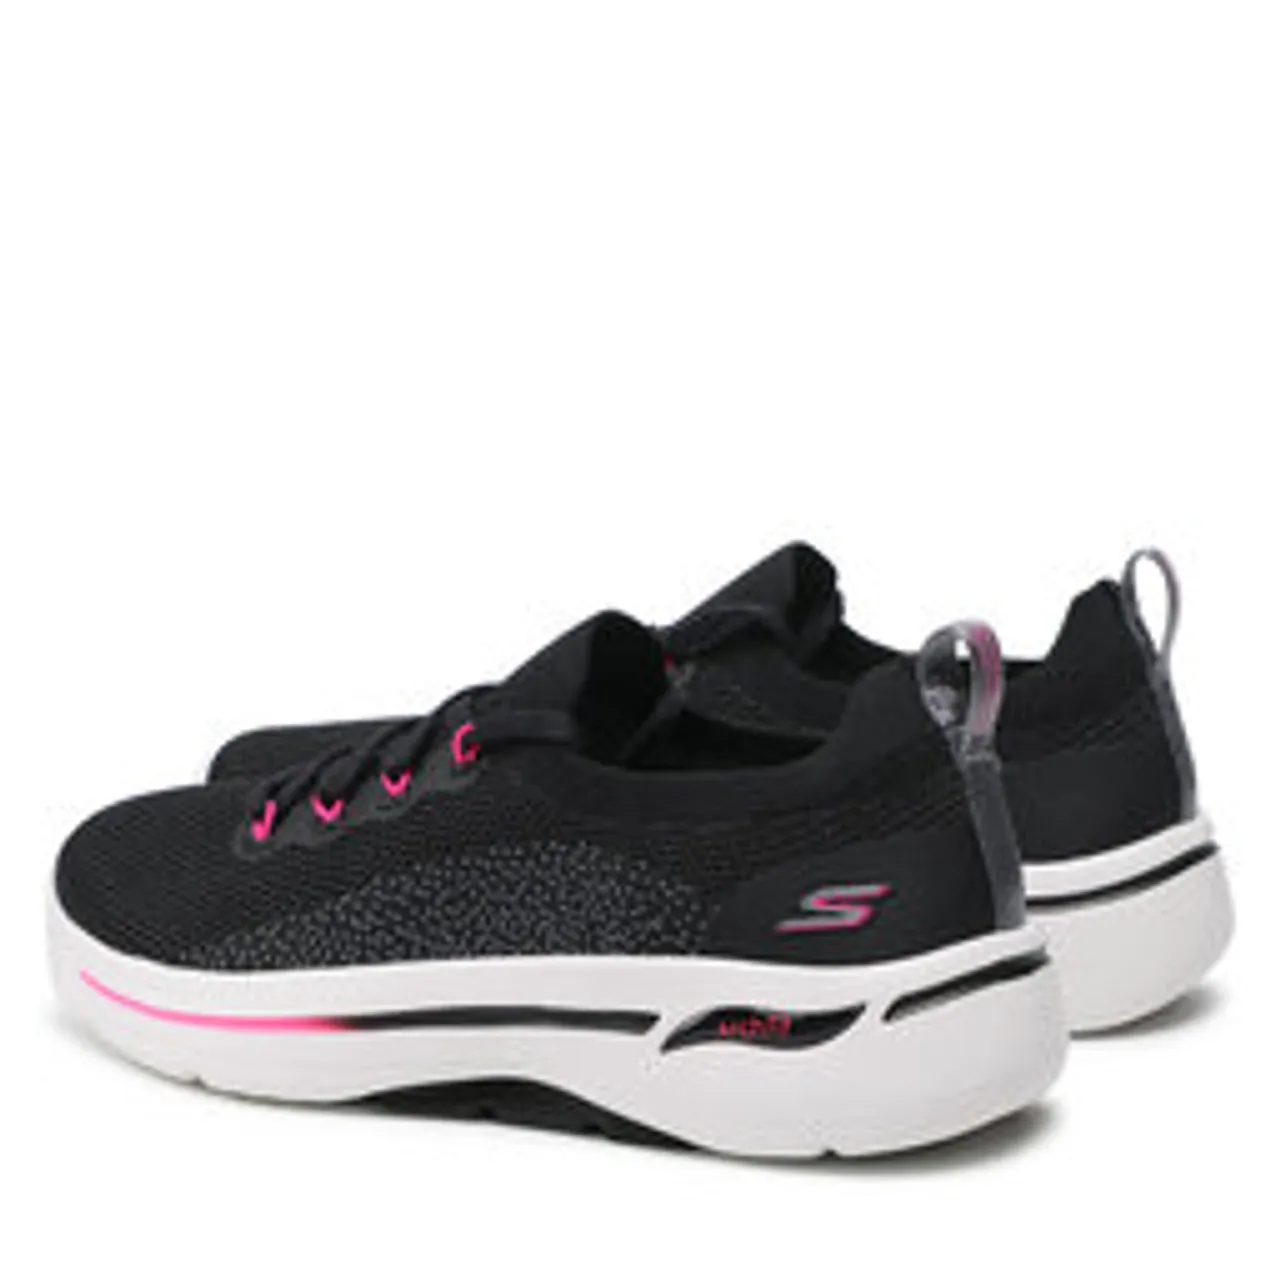 Sneakers Skechers Go Walk Arch Fit 124863/BKHP Black/Hot Pink